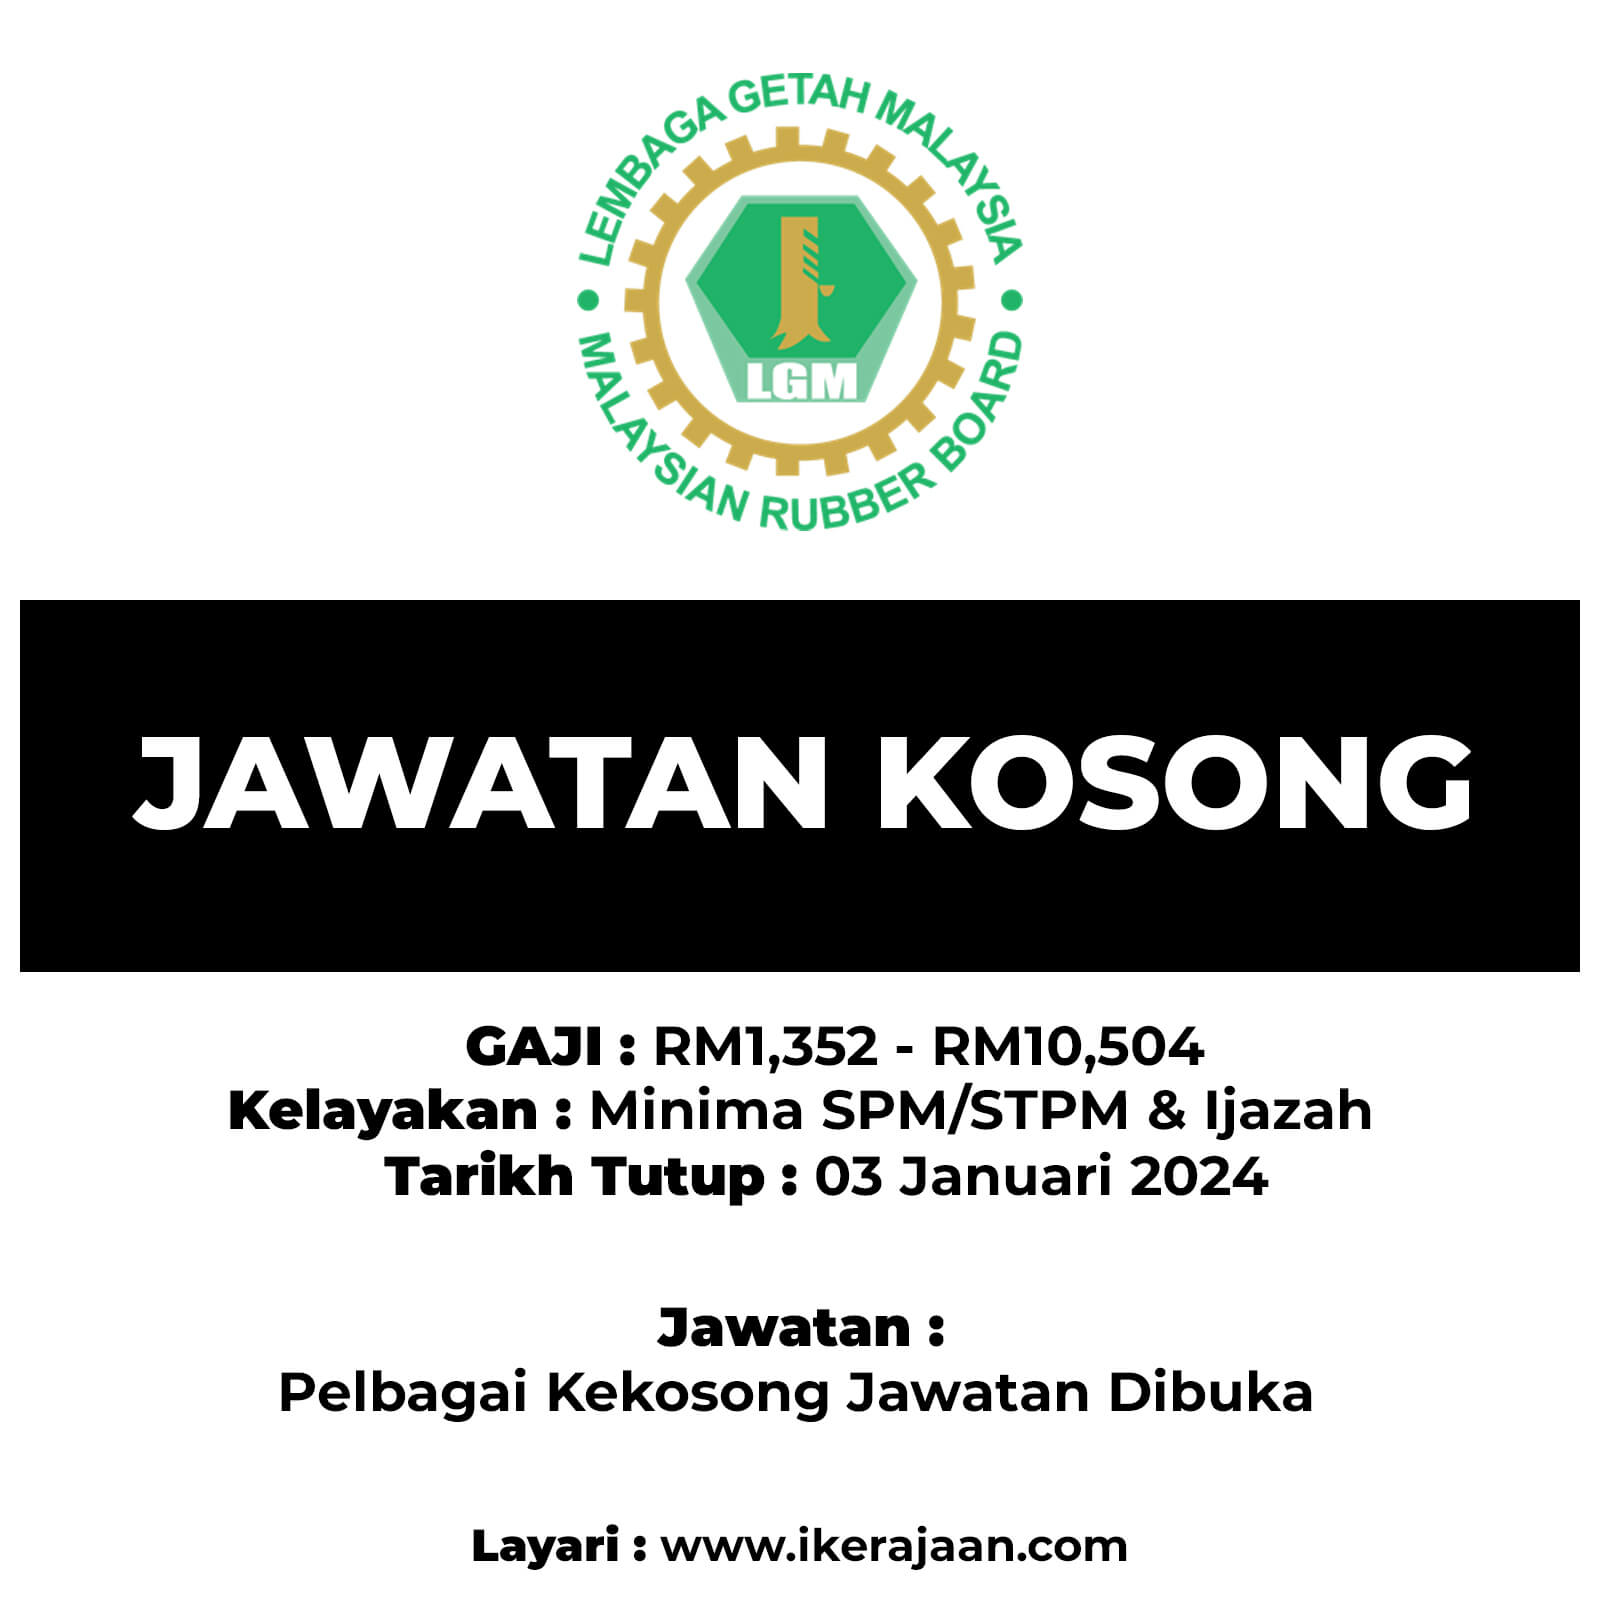 Lembaga Getah Malaysia